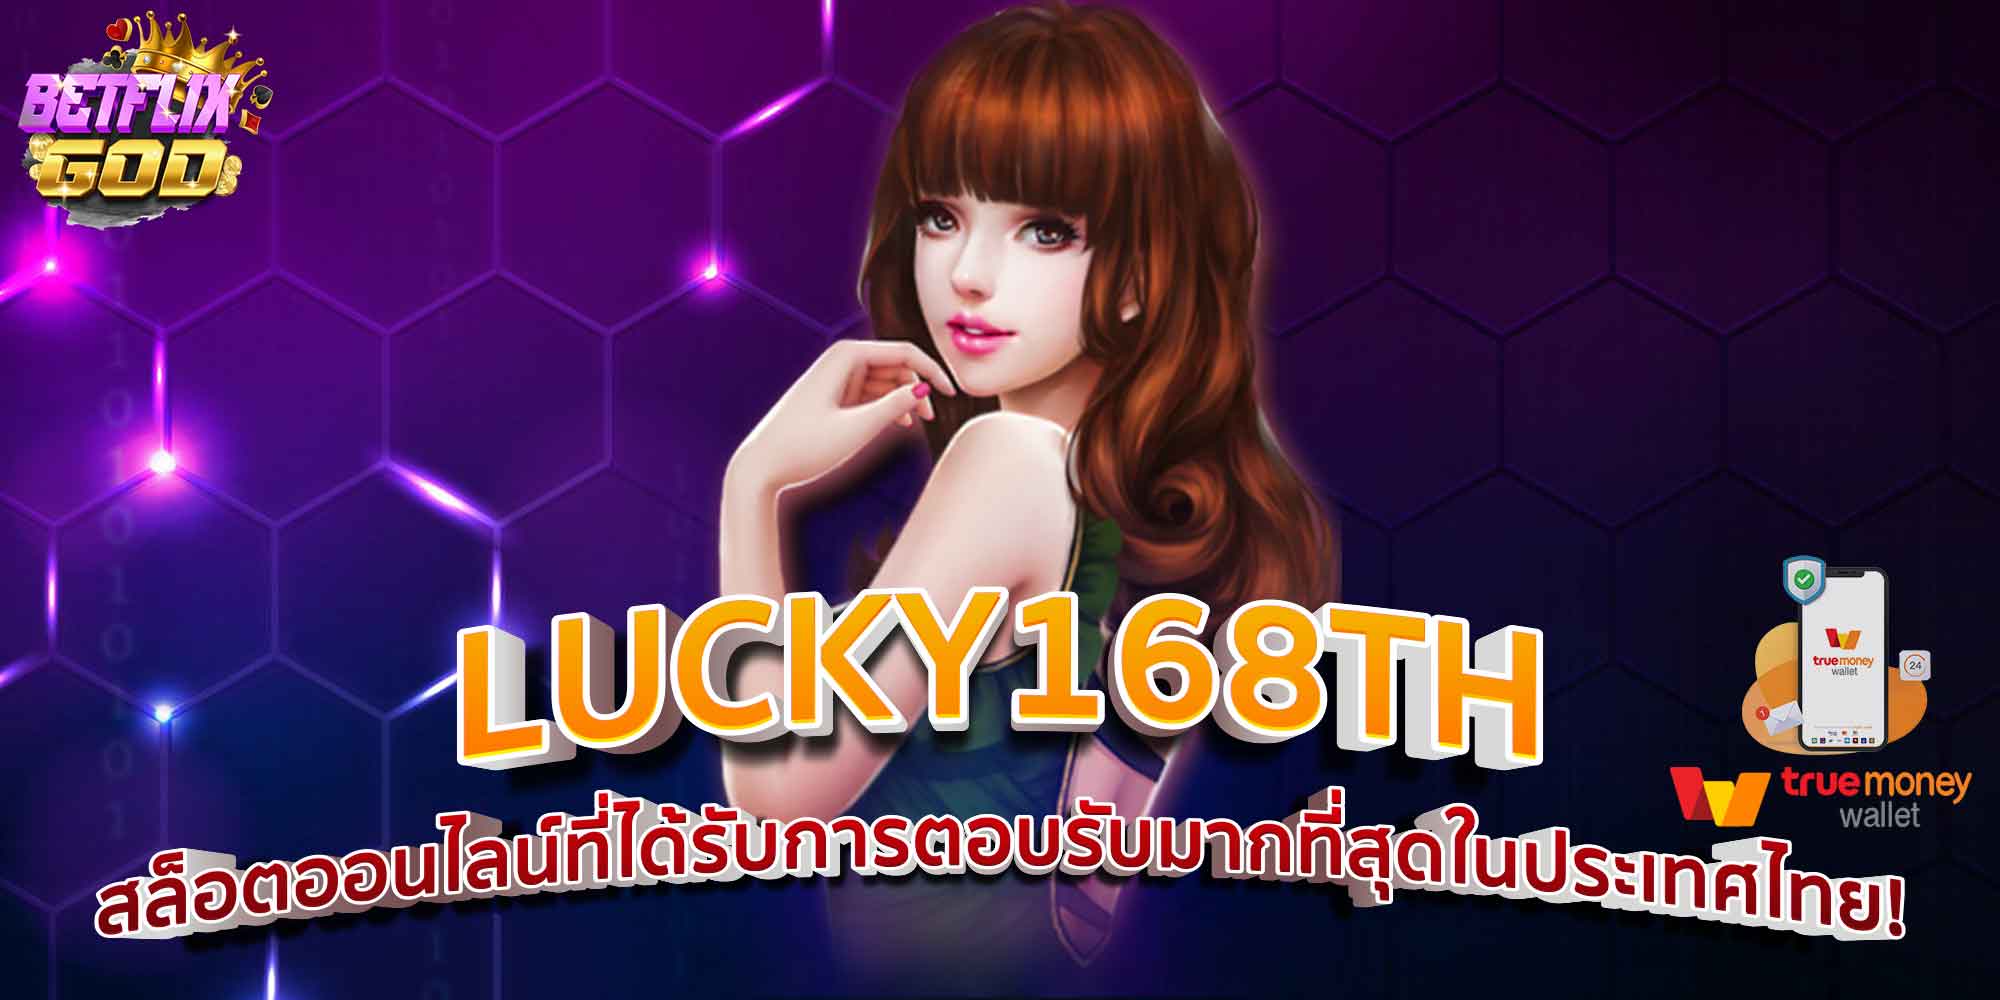 LUCKY168TH สล็อตออนไลน์ที่ได้รับการตอบรับมากที่สุดในประเทศไทย!